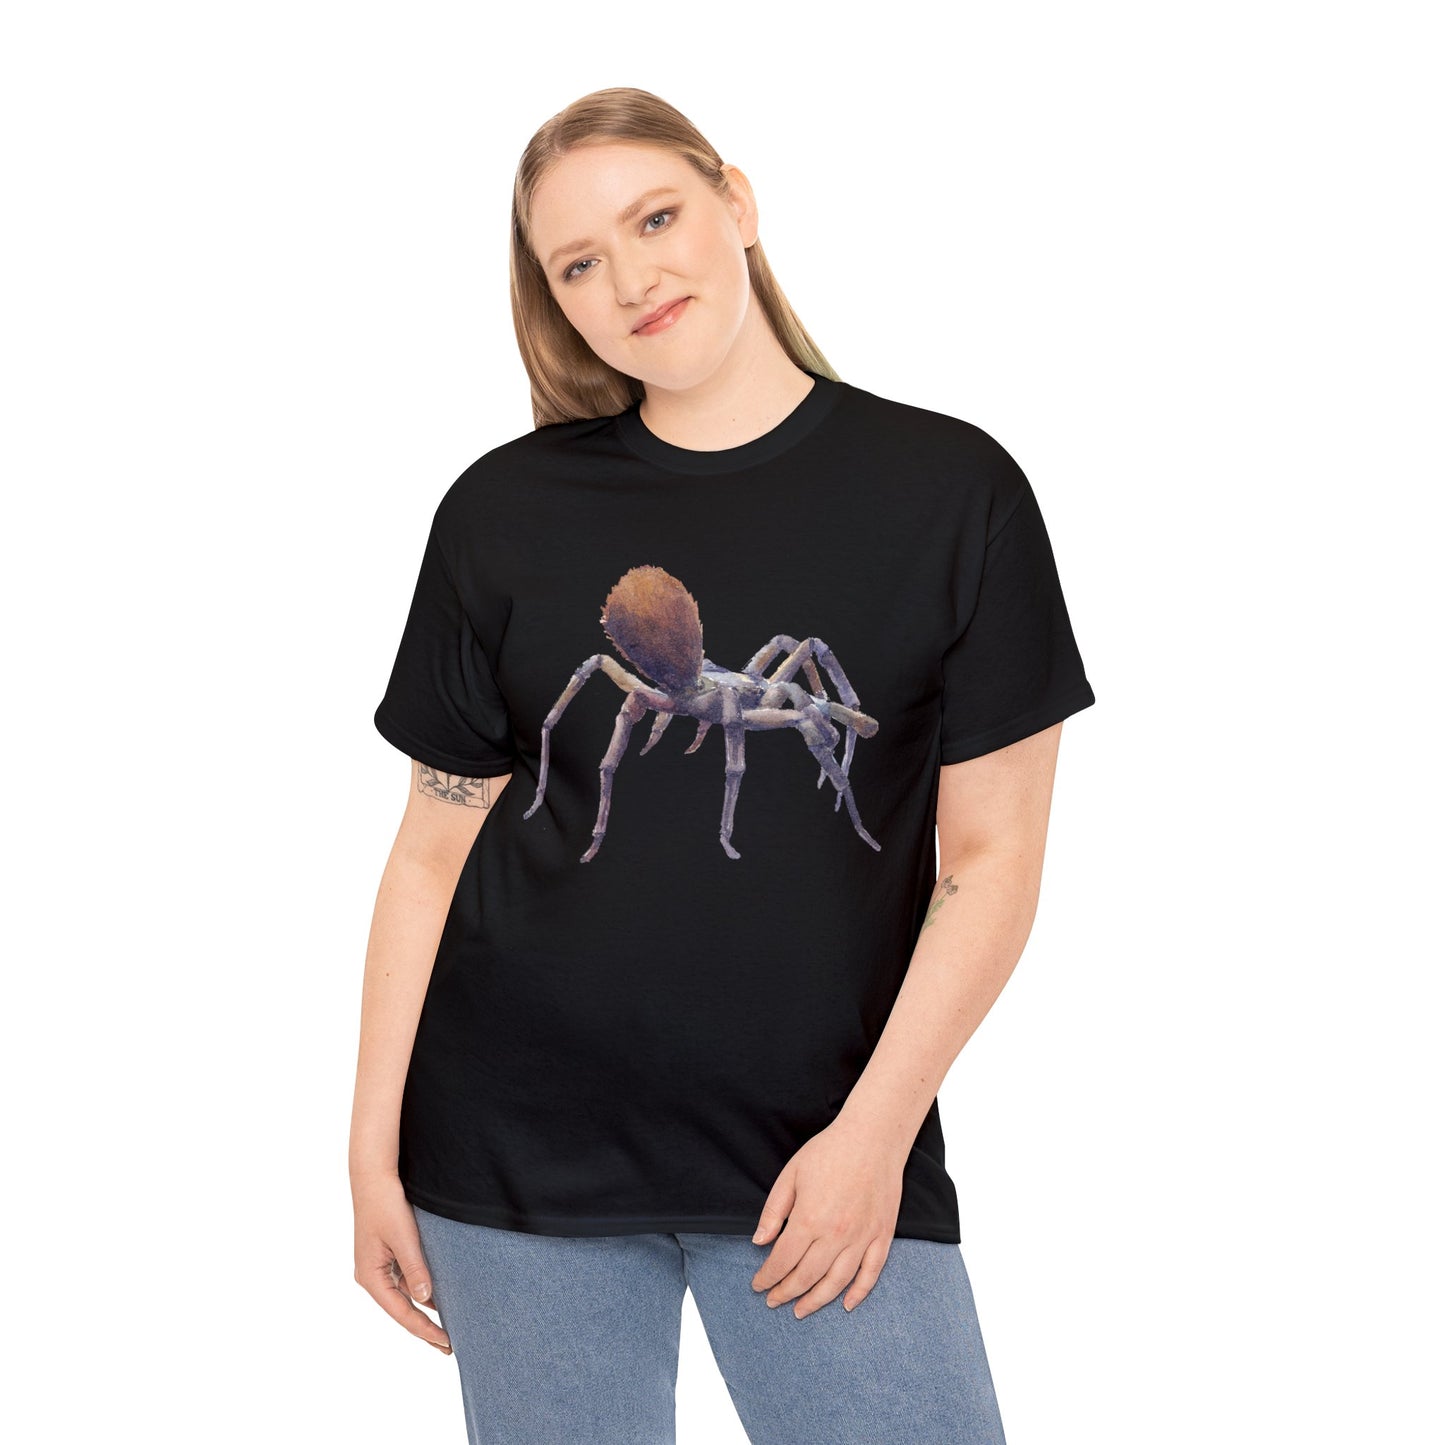 Tarantula walking unisex cotton t-shirt